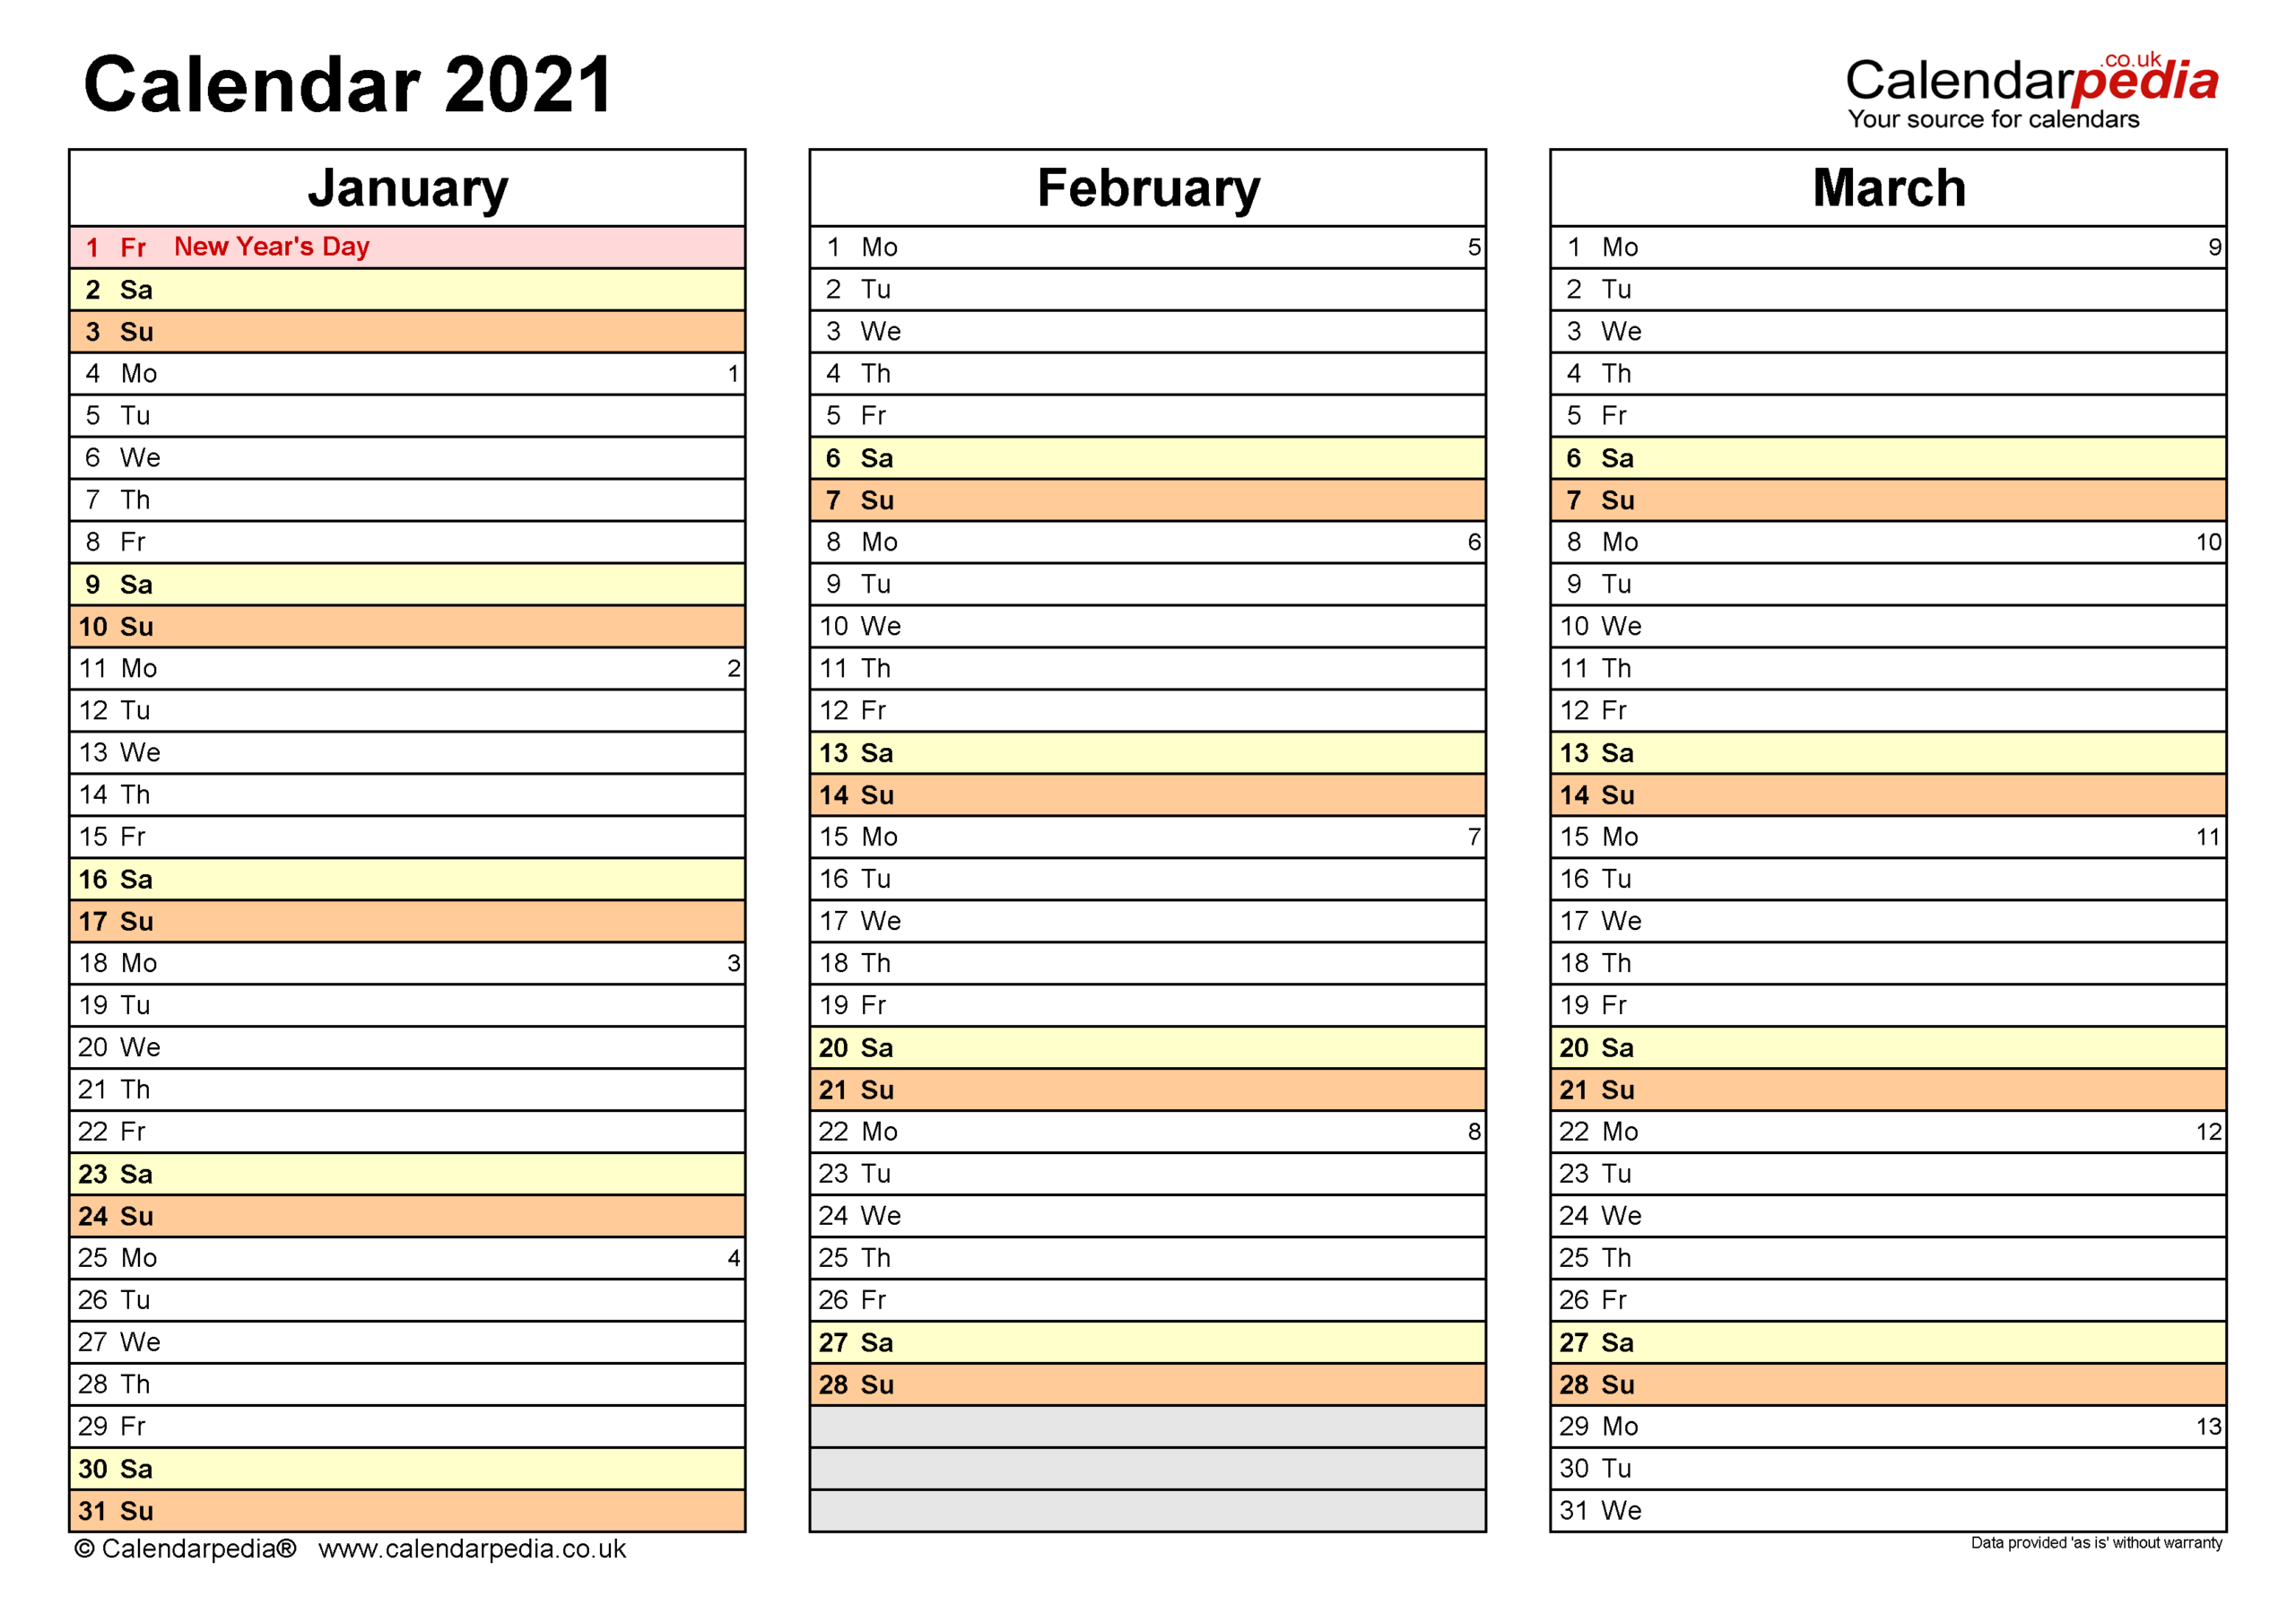 Calendar 2021 (Uk) - Free Printable Microsoft Word Templates-4 X 6 Calendars 2021